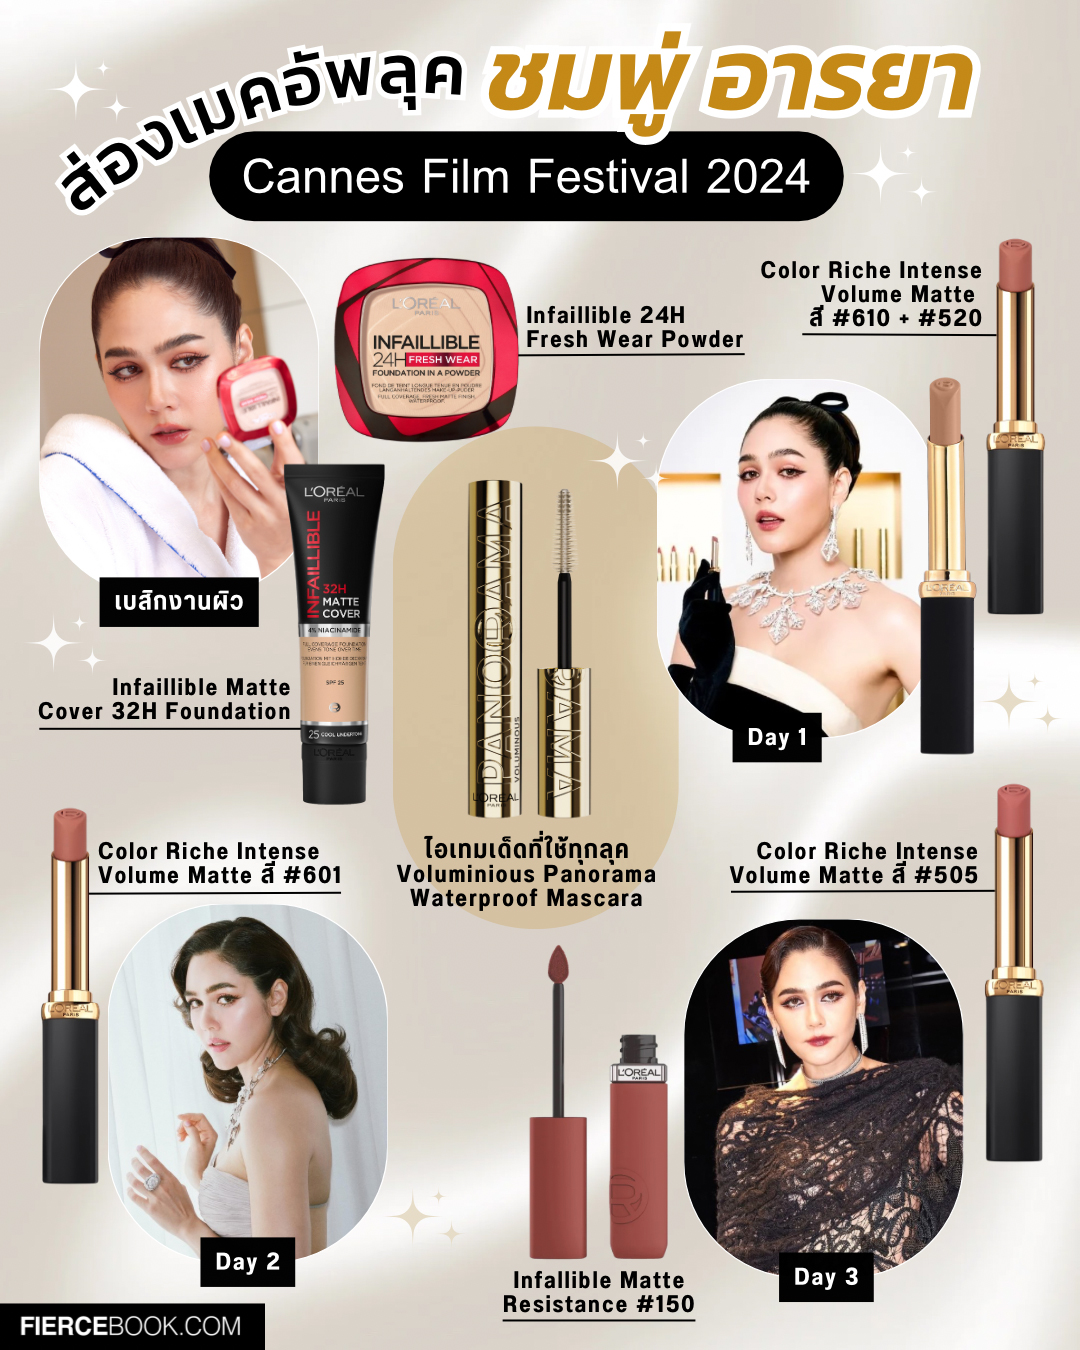 Beauty News, เมคอัพ, Makeup look, ชมพู่, อารยา เอ ฮาเก็ต, พรมแดง, เทศกาลหนังเมืองคานส์ 2024, Cannes Film Festival 2024, Day 1, Day 2, Day 3, L’Oreal Paris, มาสคาร่า, ลิปสติก, สีลิป, แม่ชม, แป้ง, รองพื้น, ลอรีอัล ปารีส